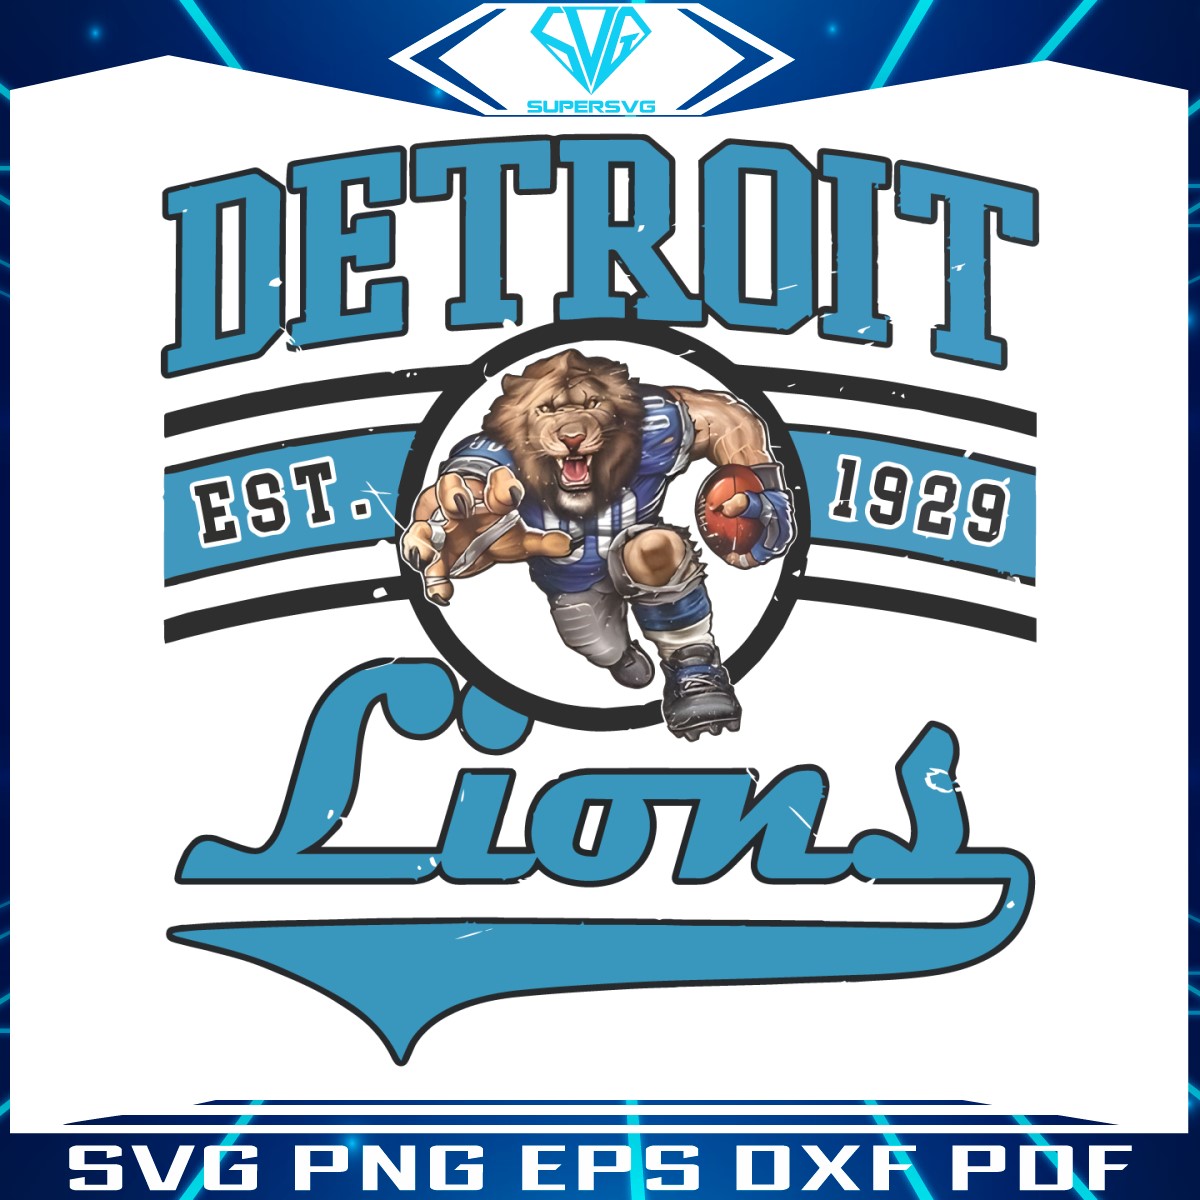 detroit-lions-est-1929-mascot-football-png